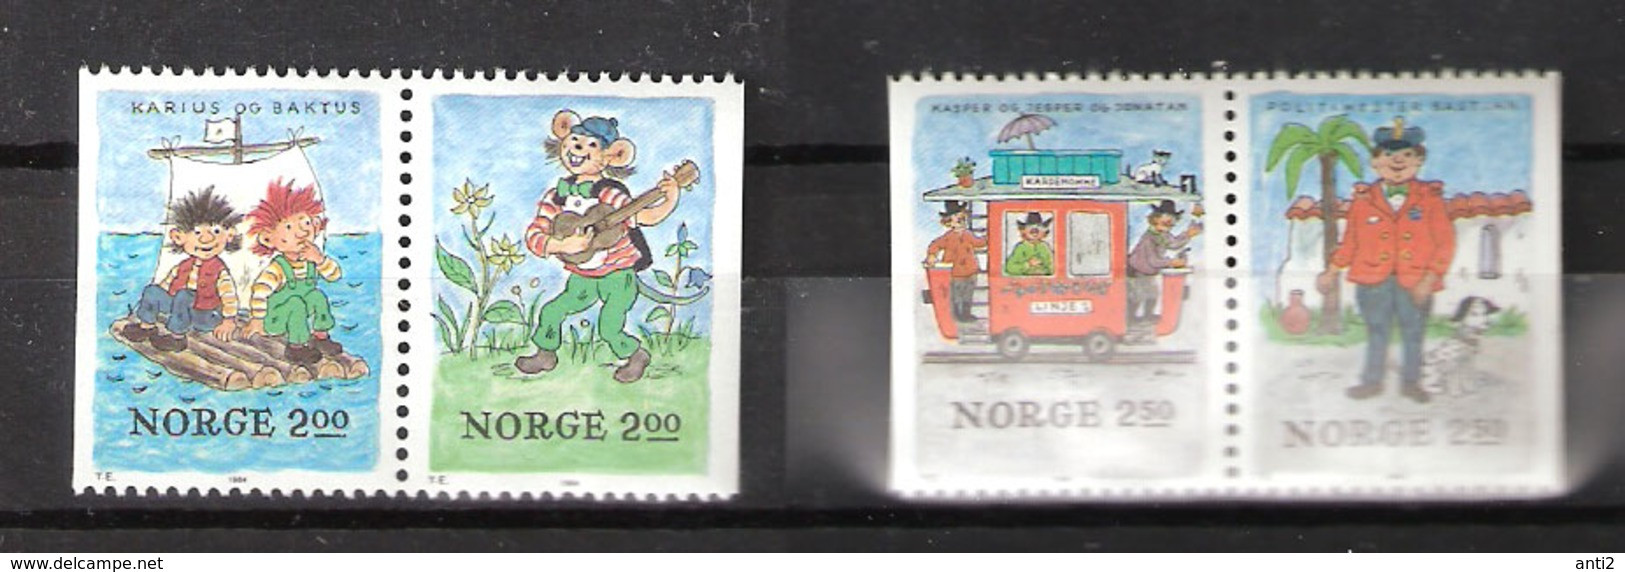 Norge Norway 1984  Christmas: Children Books Illustrations, Kardemomme By / Karius And Baktus   Mi 914-917, MNH(**) - Nuevos